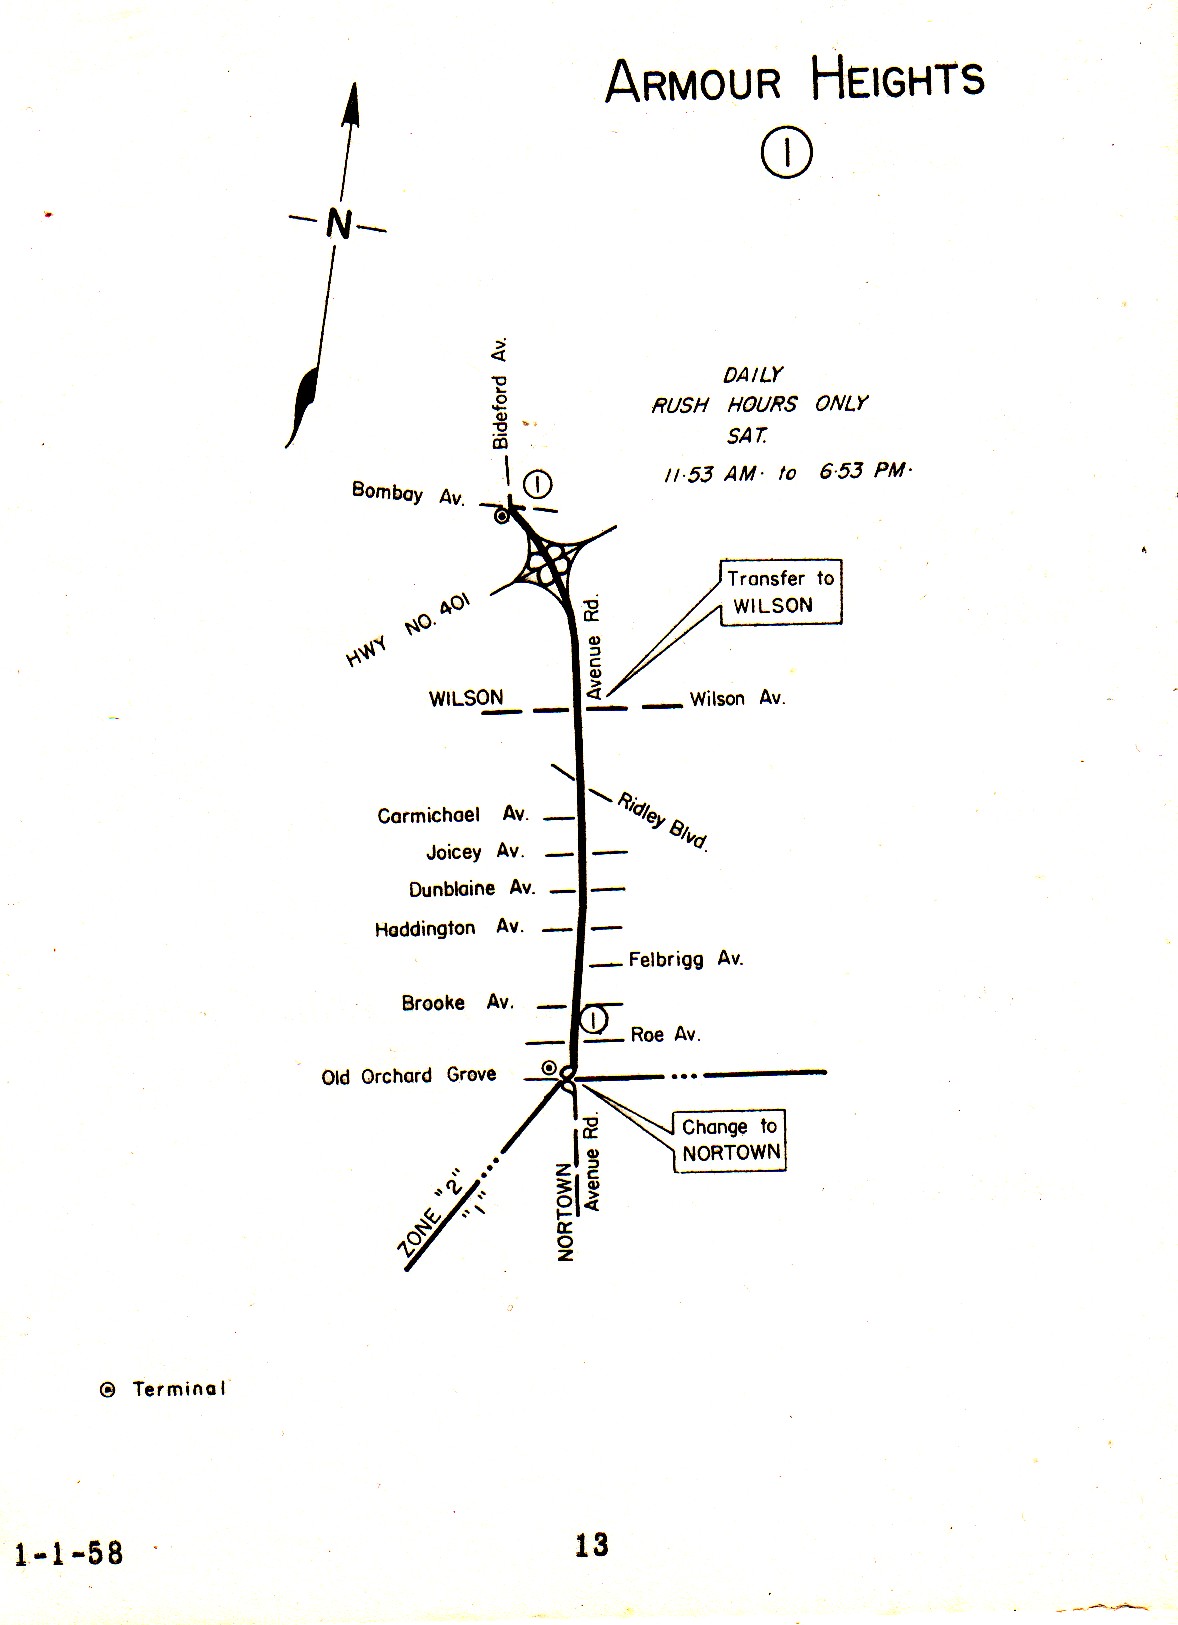 armour-heights-map-1958.jpg